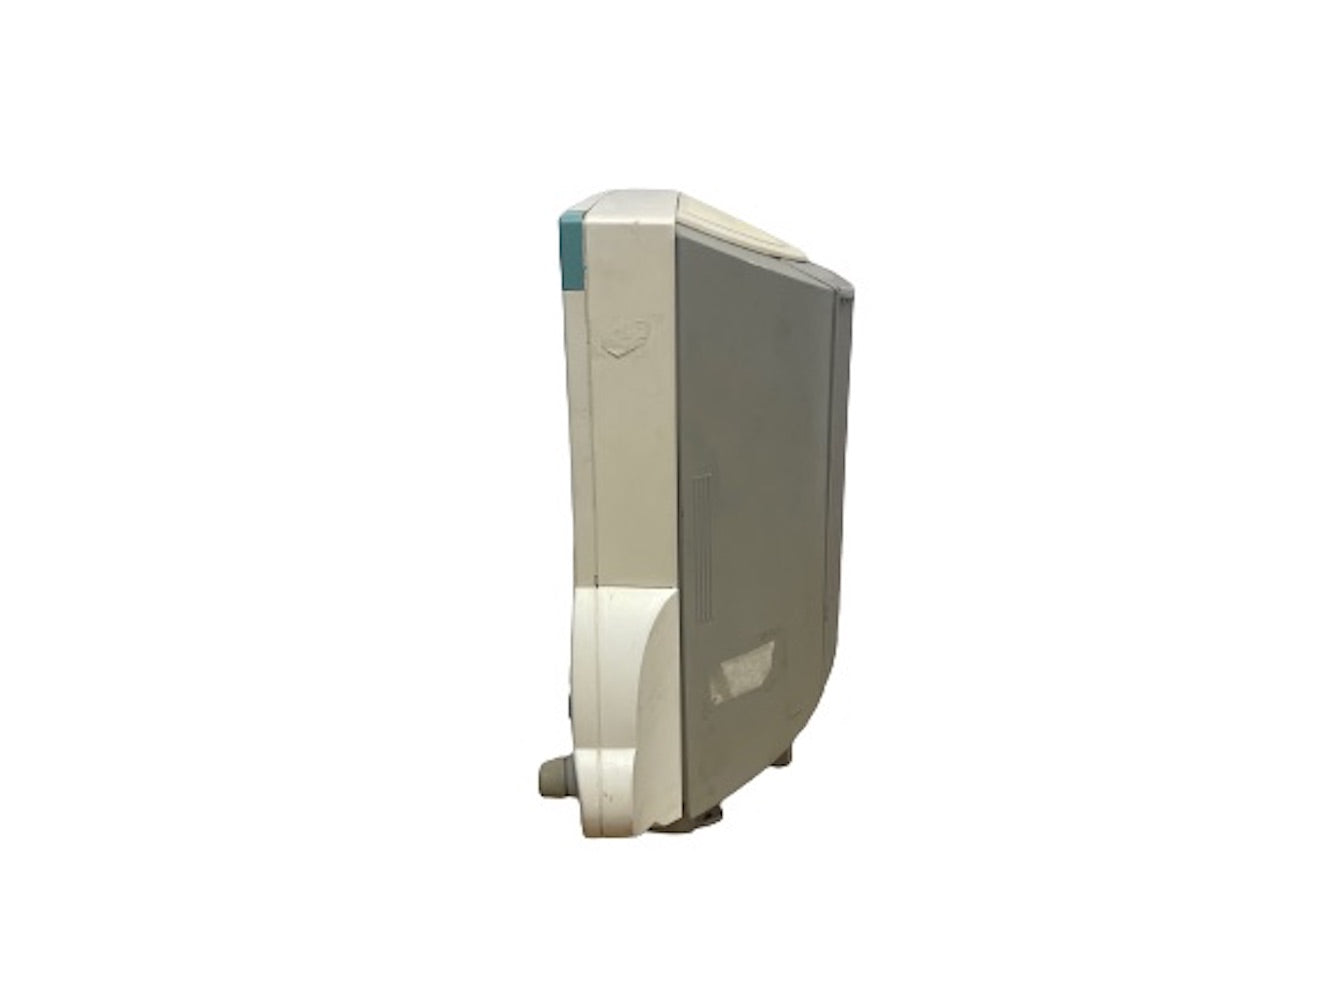 Philips IntelliVue MP70 Patient Monitor SN:DE61747094 REF:M8007A DIAGNOSTIC ULTRASOUND MACHINES FOR SALE